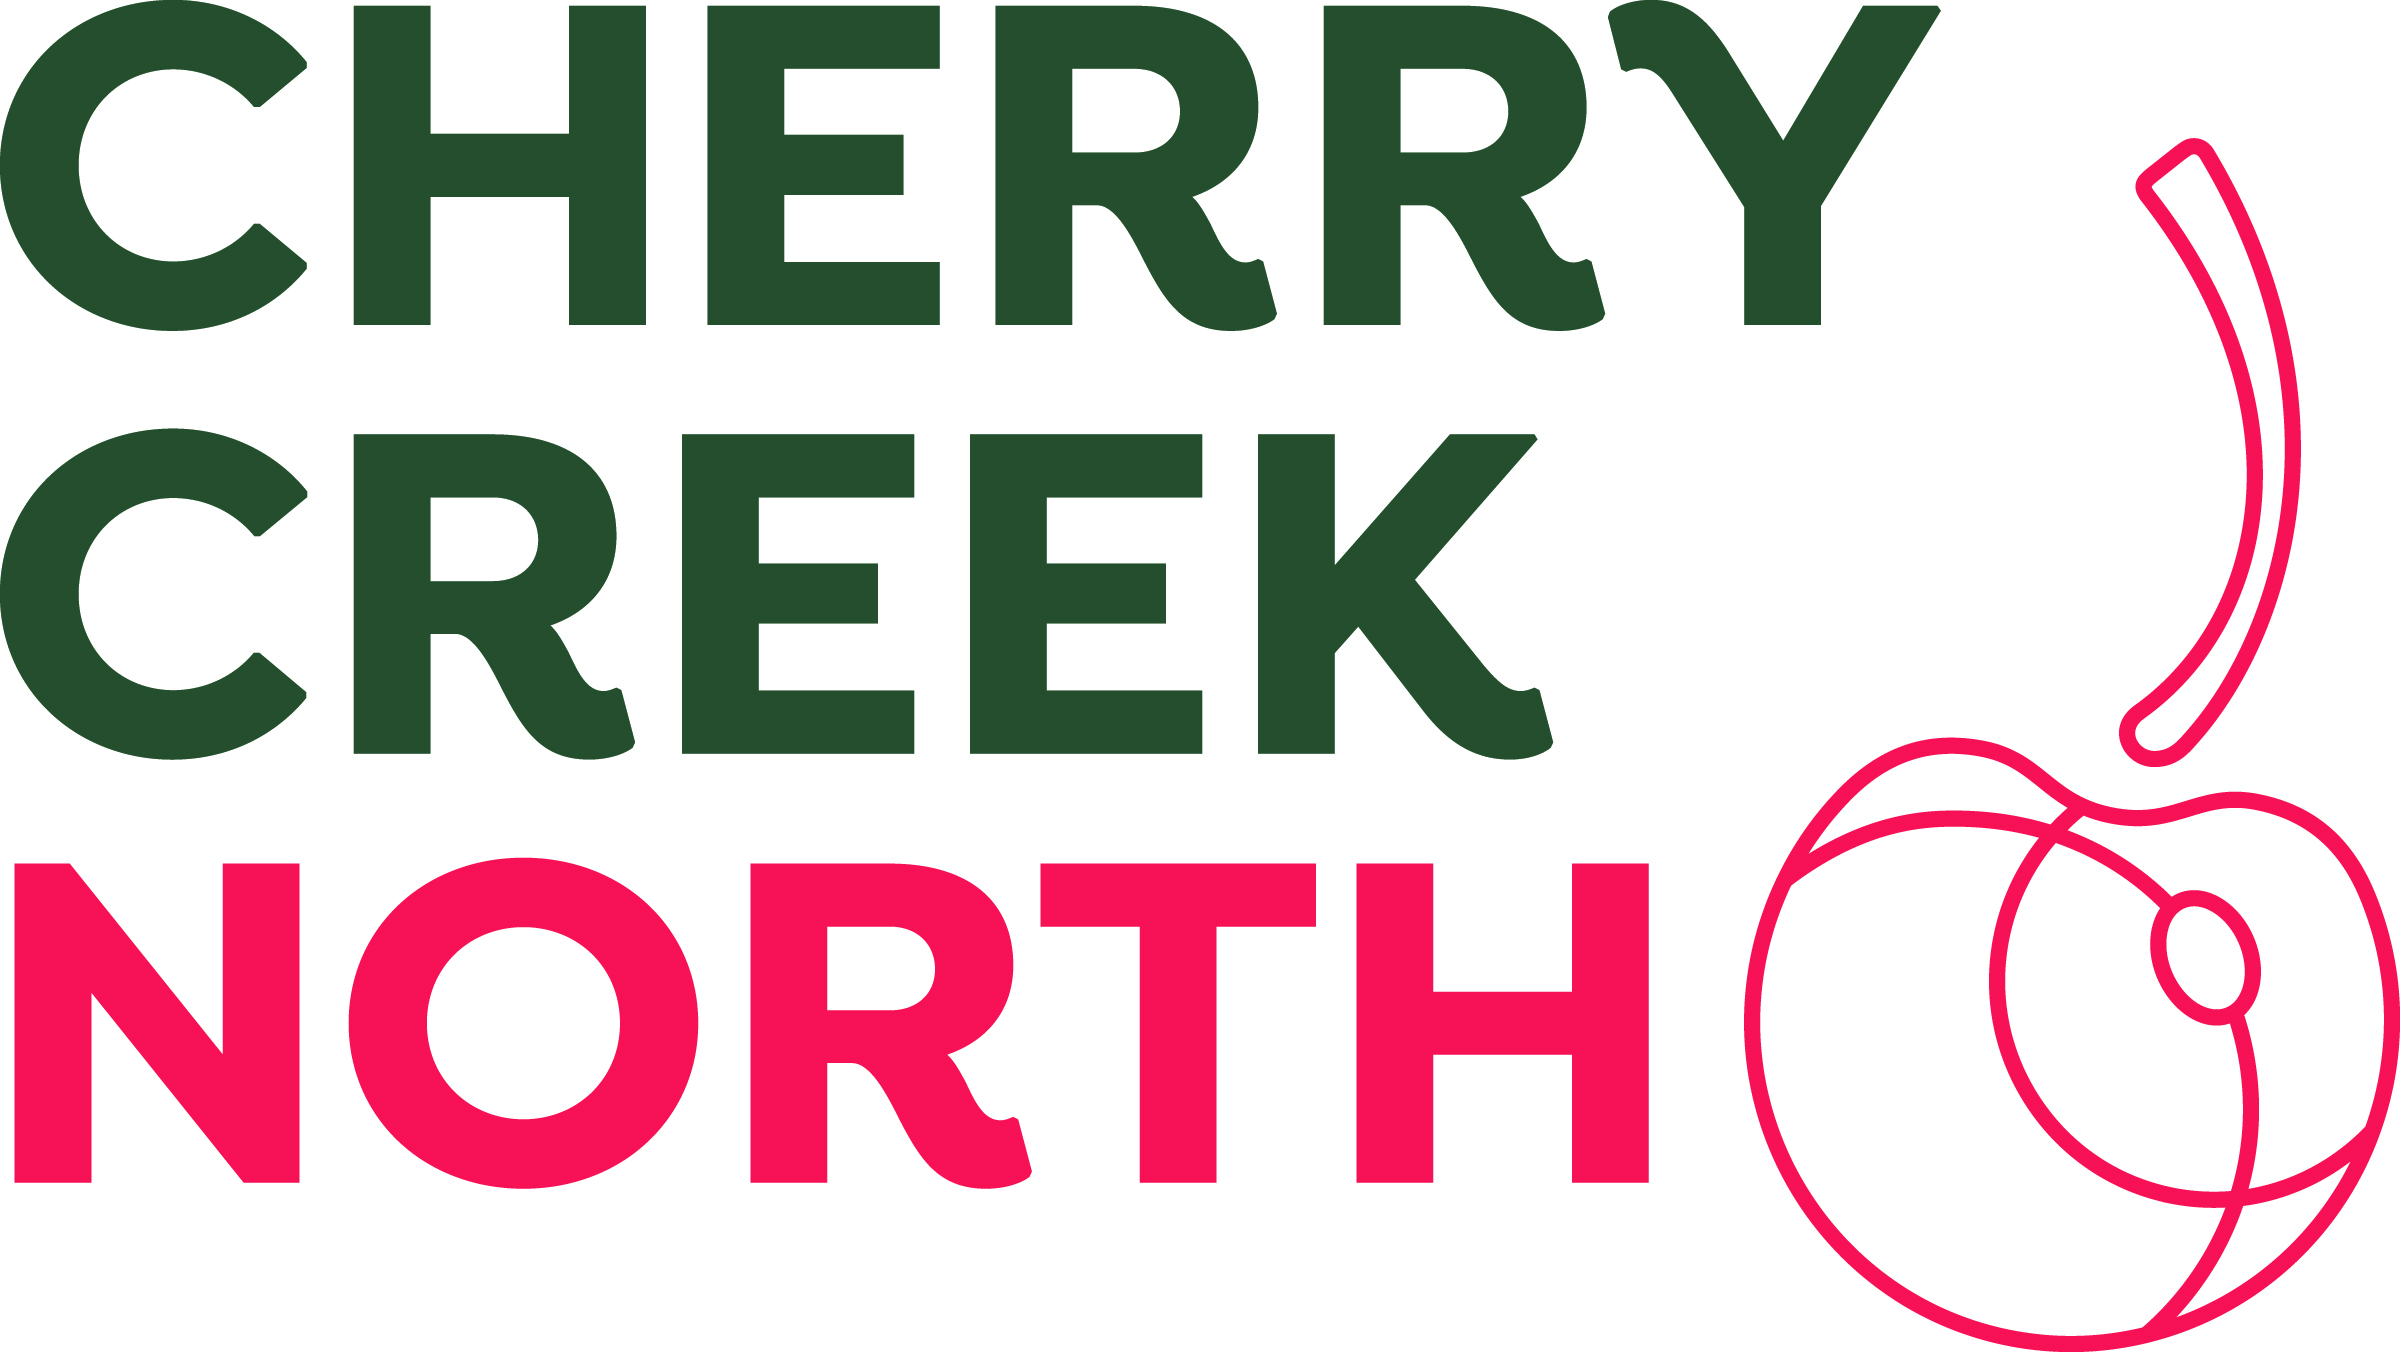 Organization logo of Cherry Creek North Business Improvement District (BID)